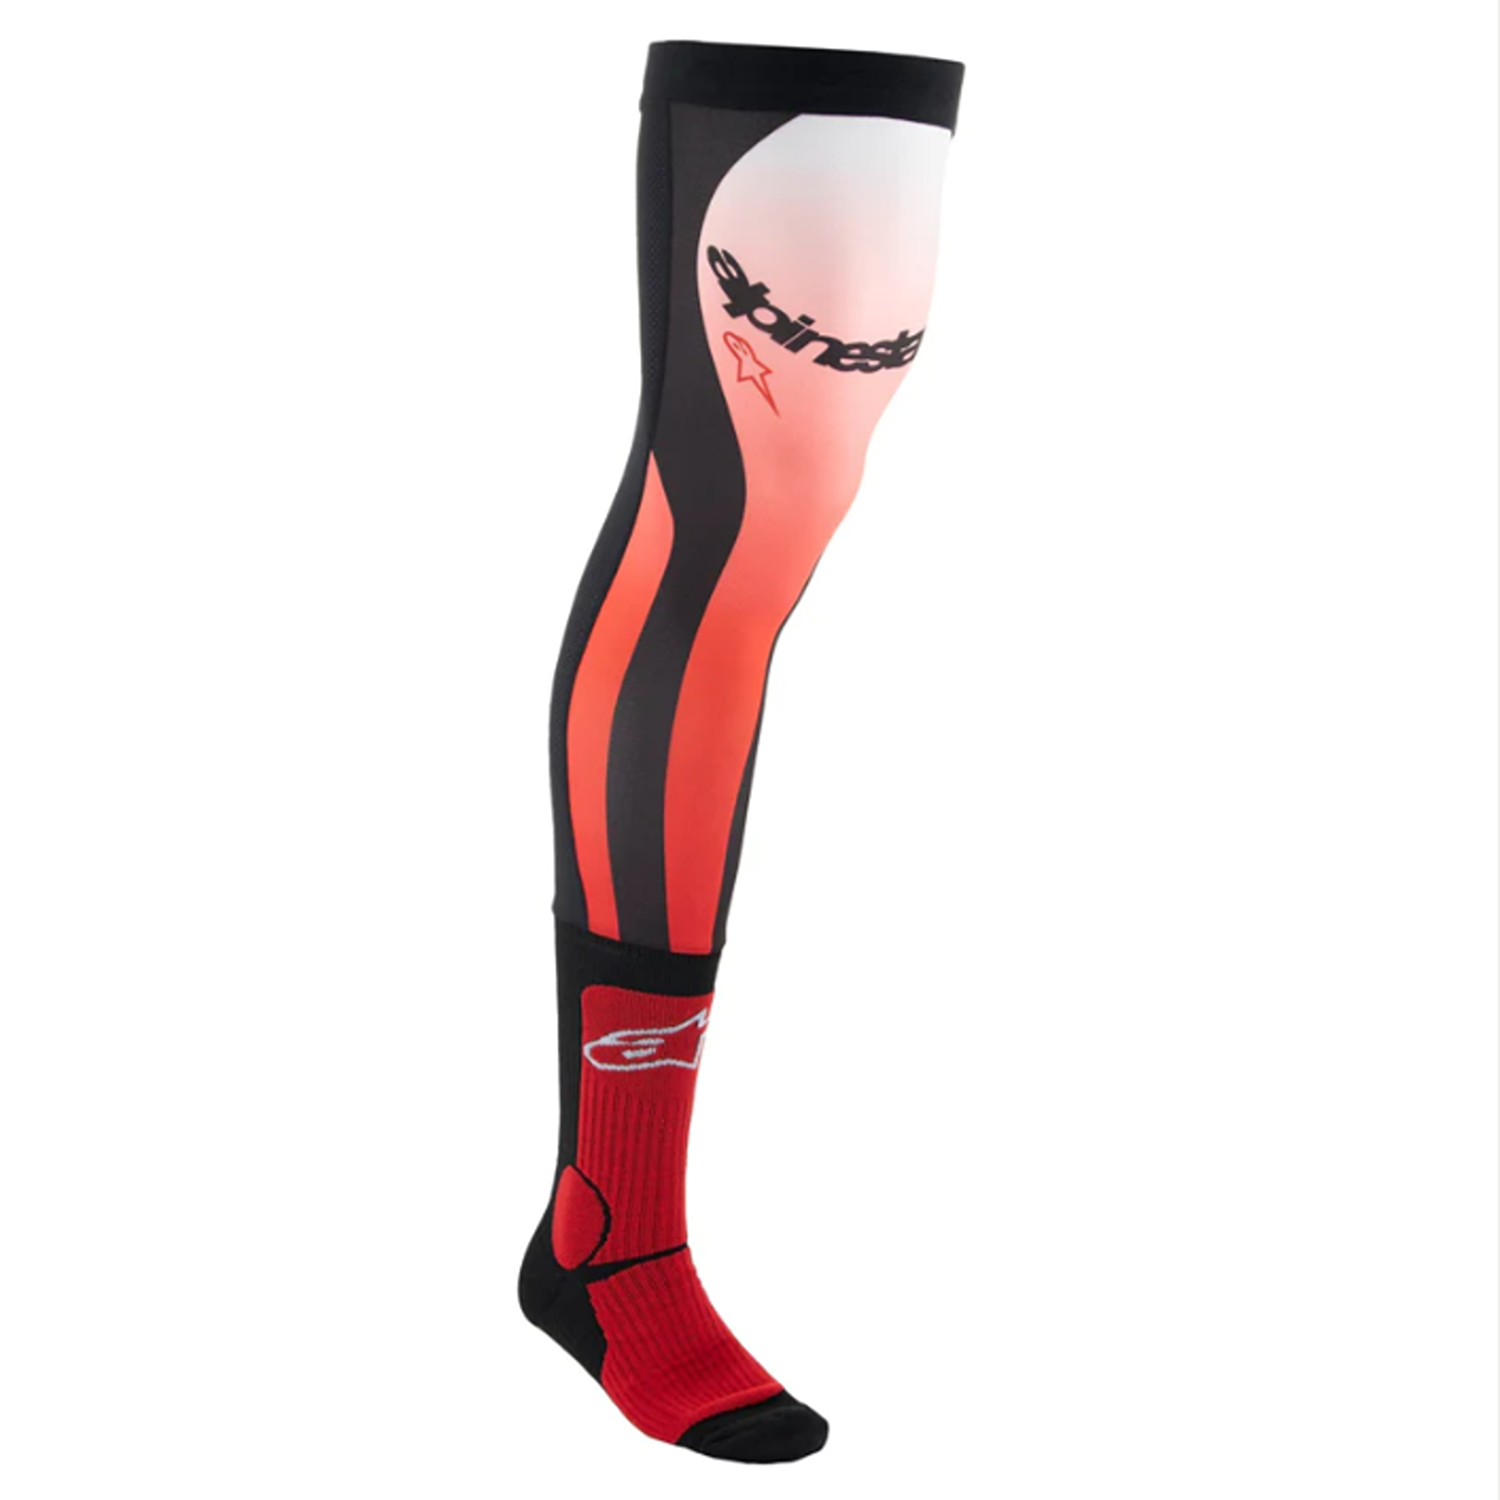 Alpinestars Knee Brace Socks Bright Red White Size L-XXL